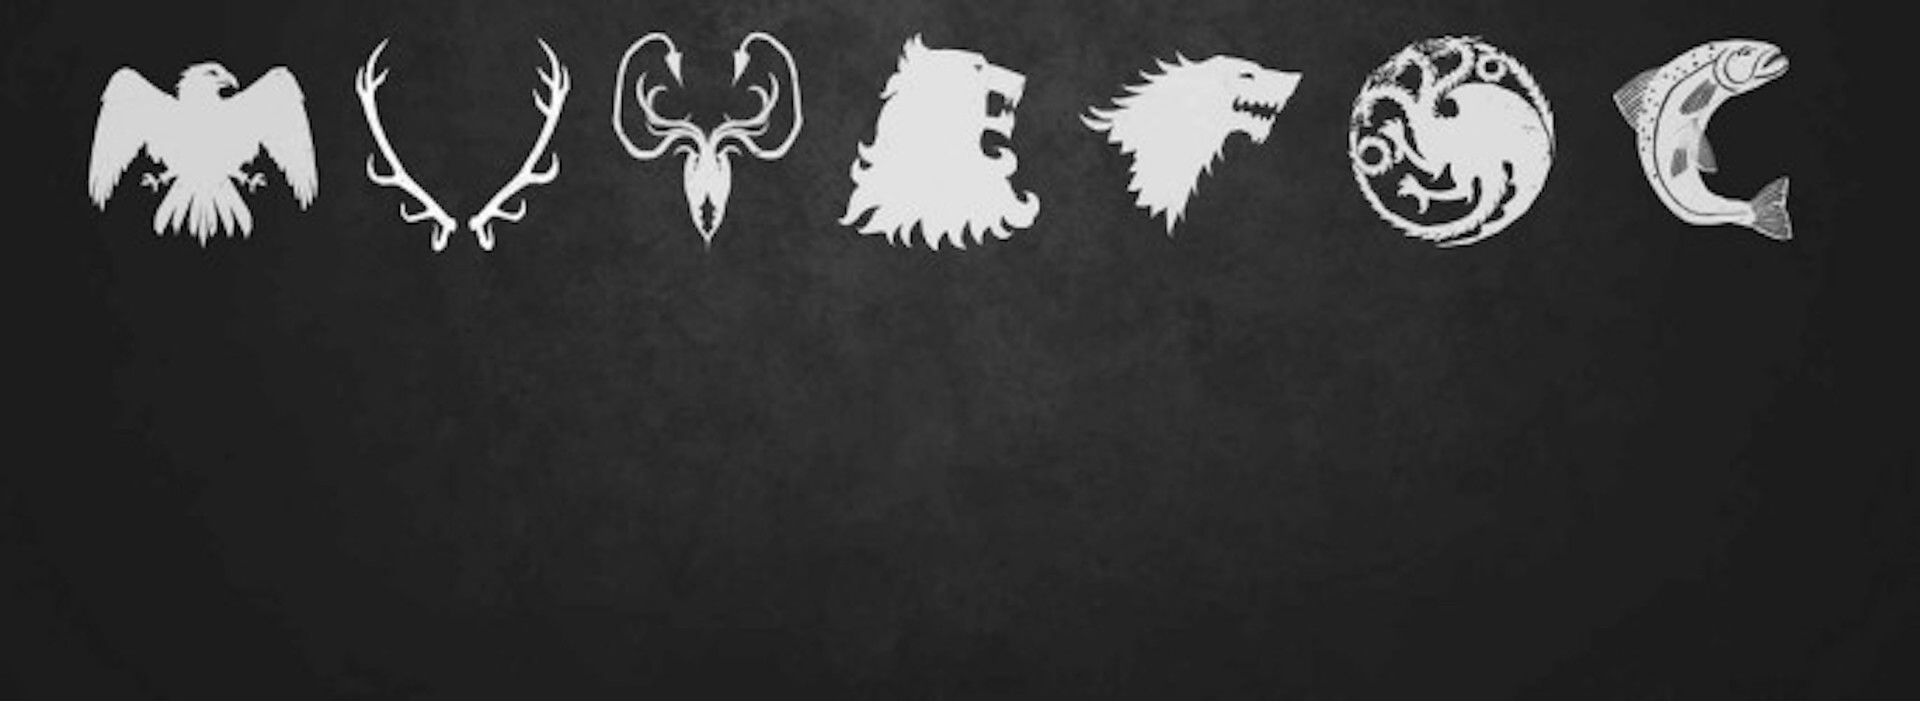 game of thrones symbols on black background